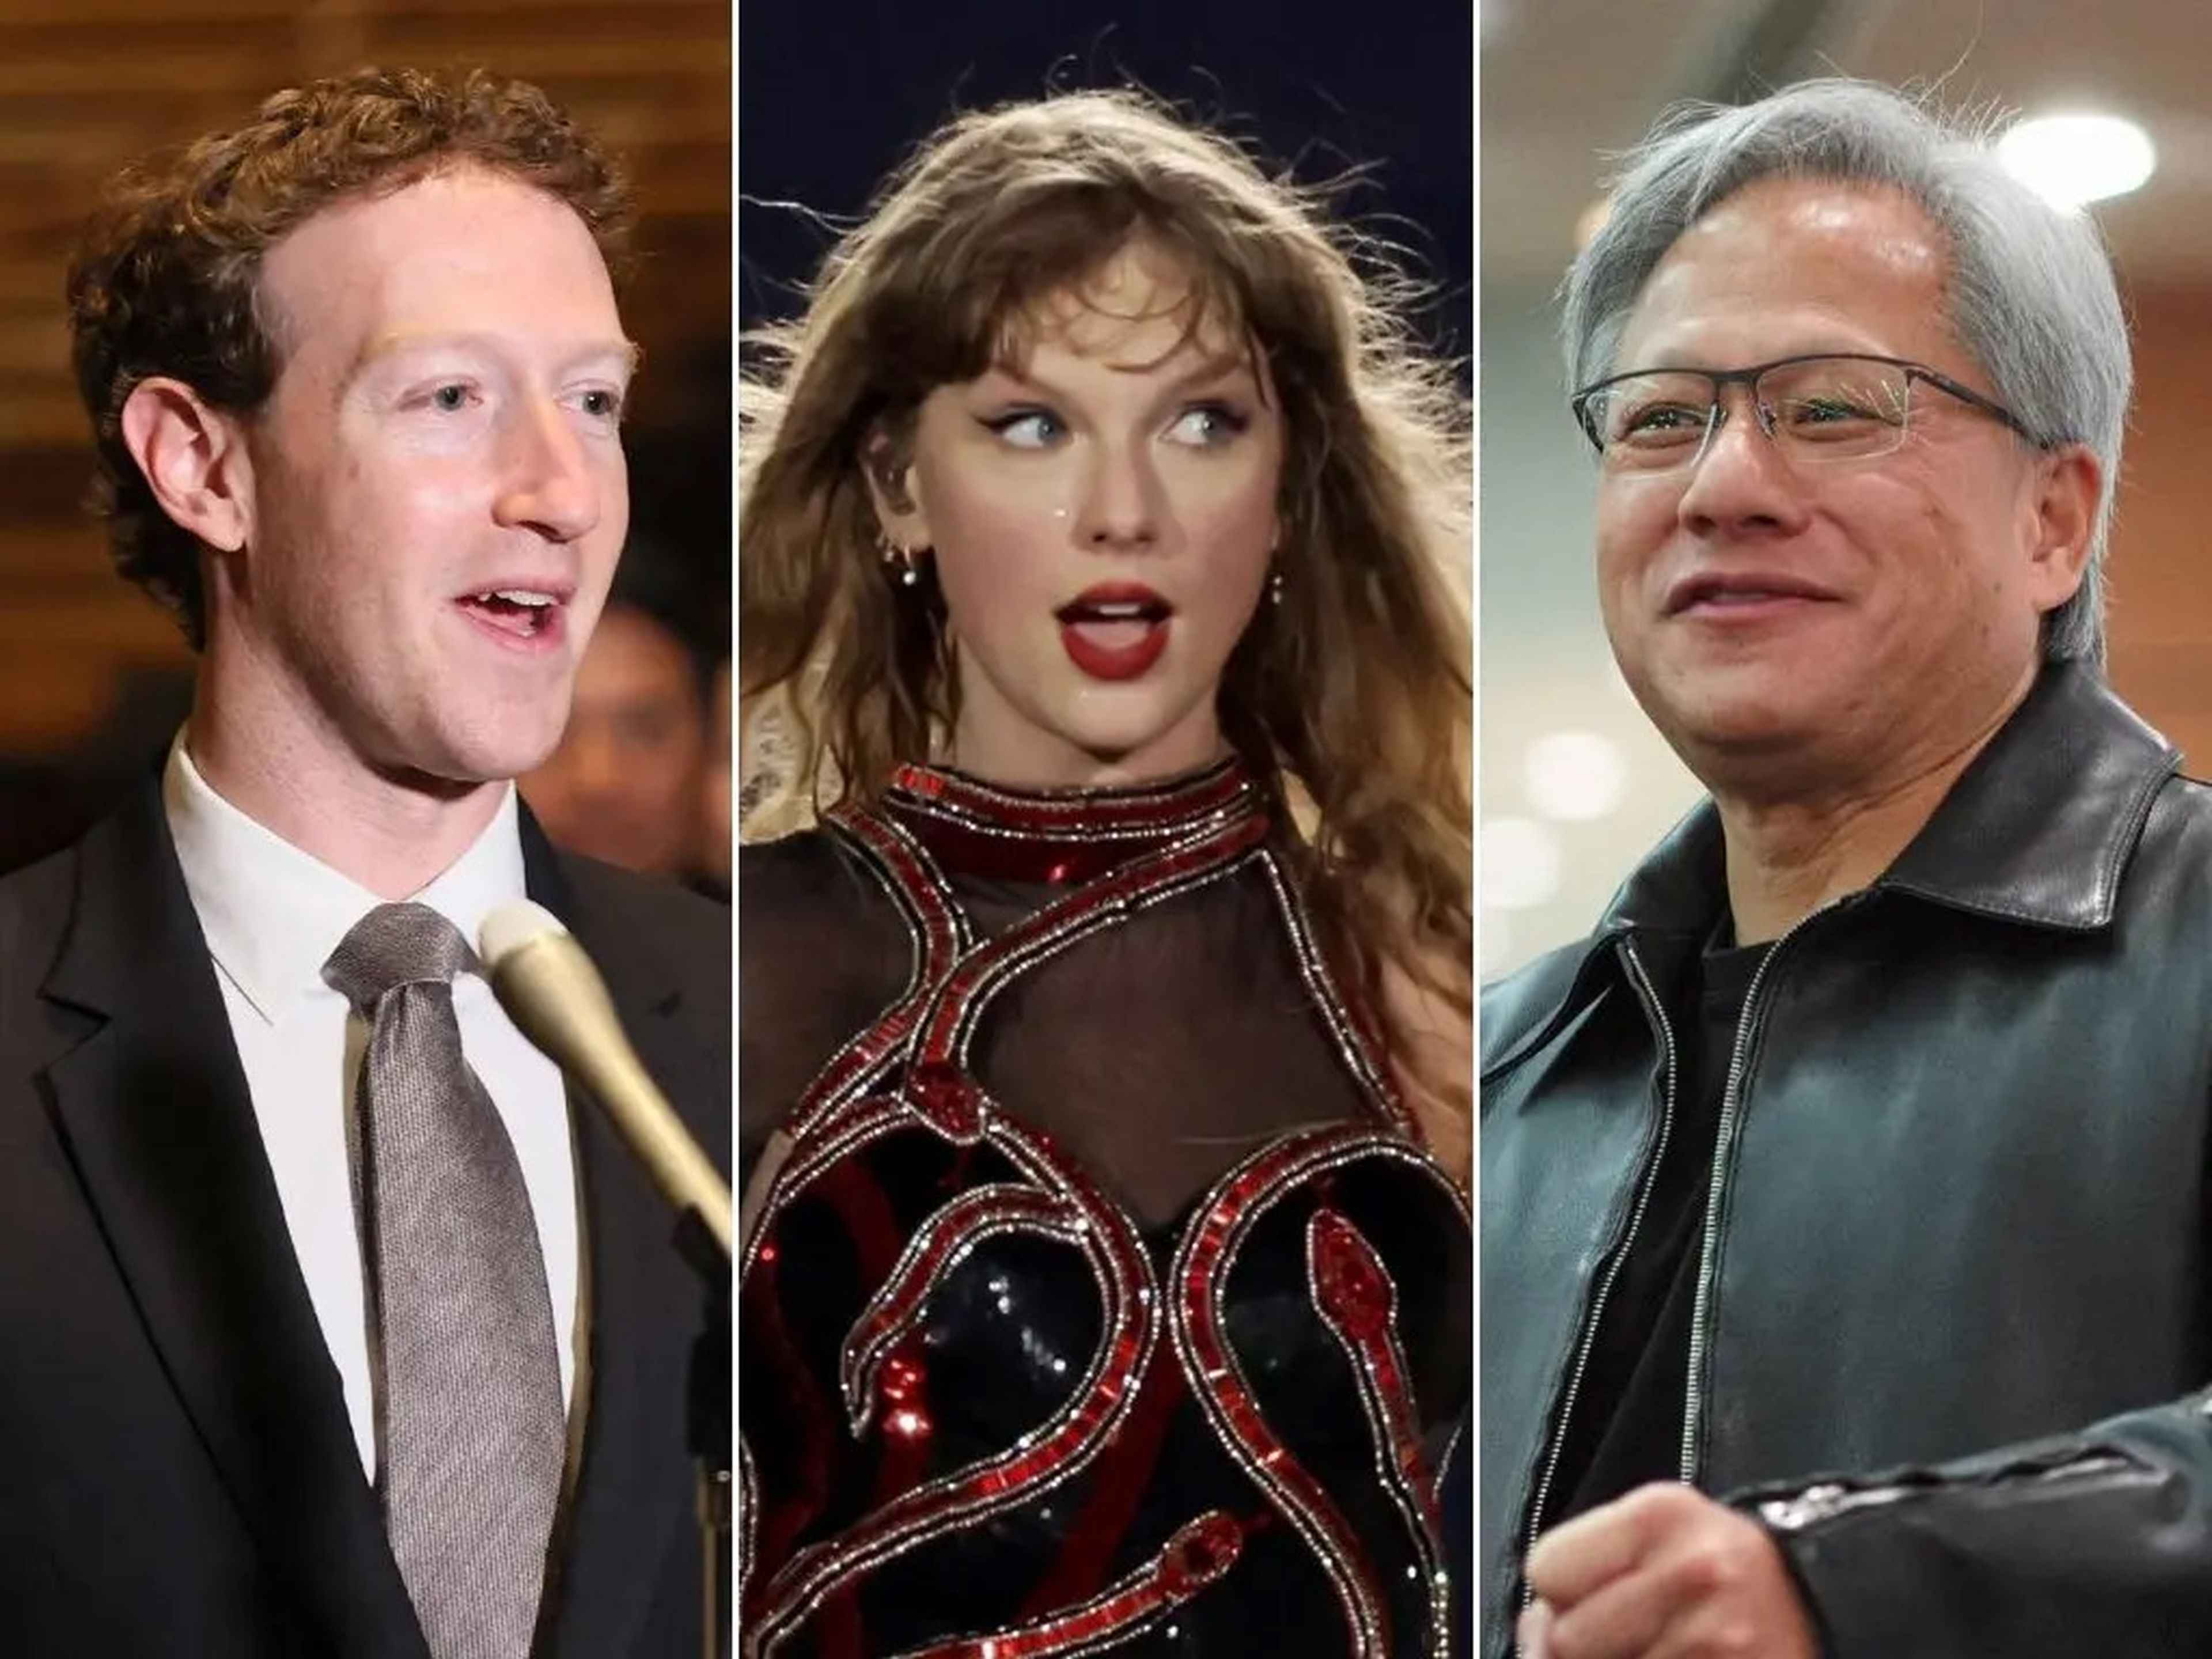 Mark Zuckerberg (left), Taylor Swift (center), and Jensen Huang (right).